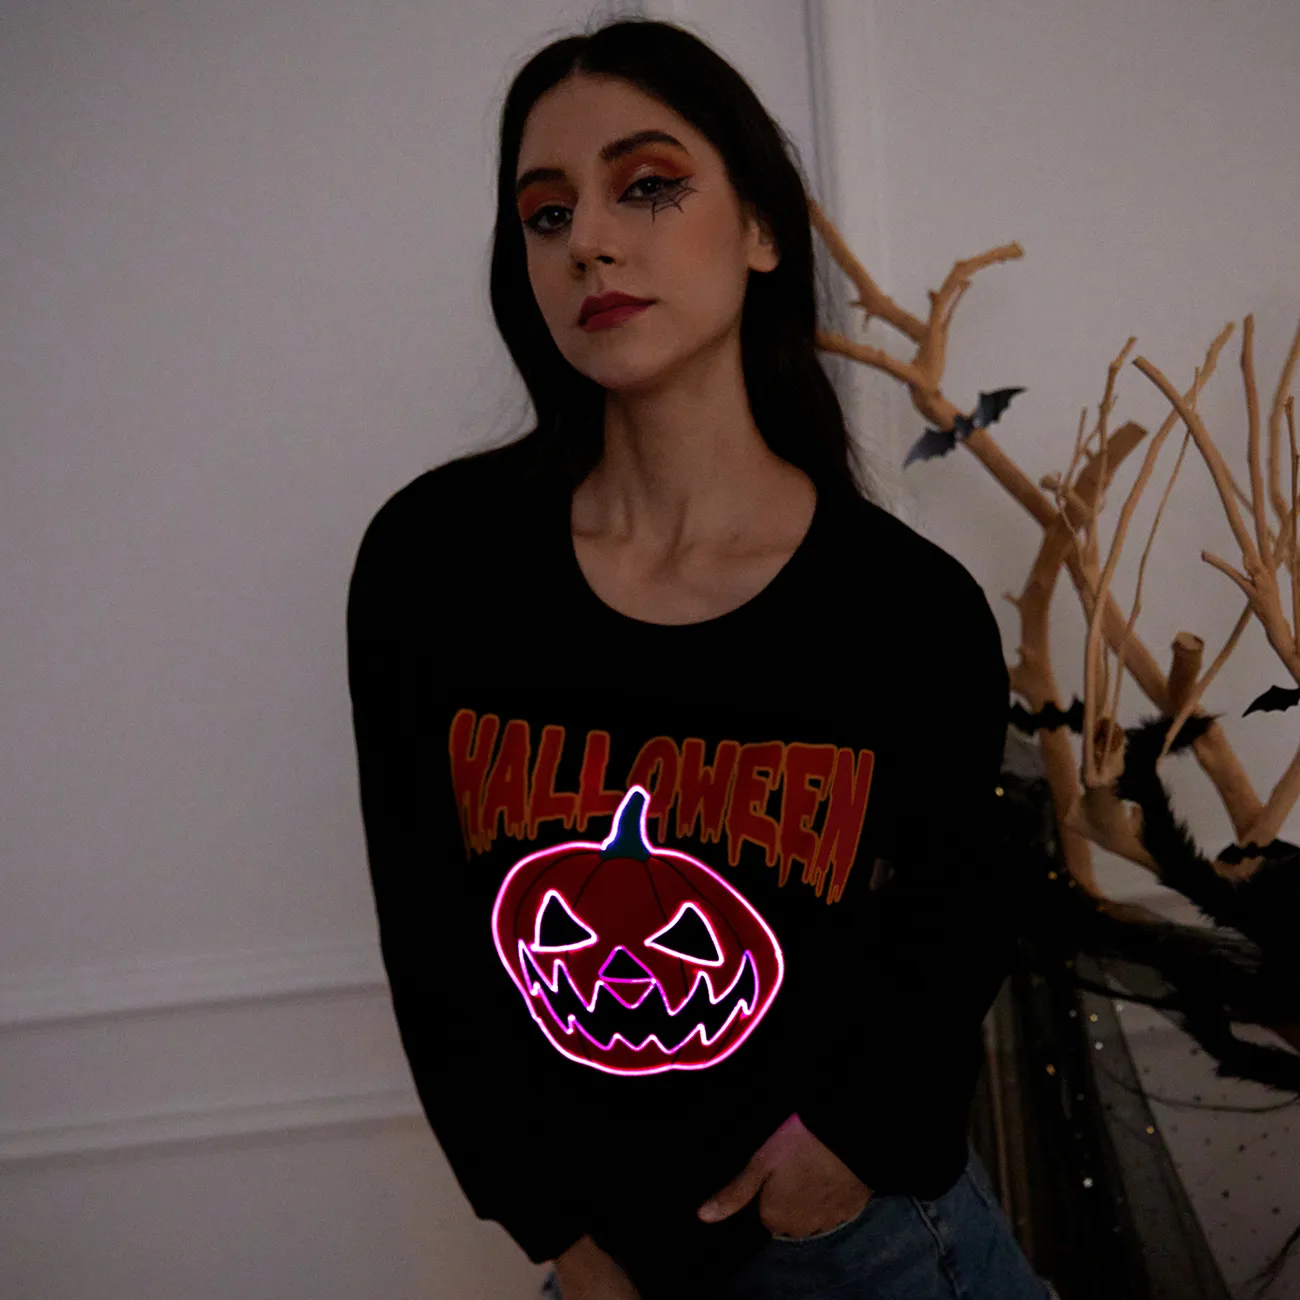 Go-Glow Halloween Illuminating Adult Sweatshirt with Light Up Pumpkin for Women Including Controller (Built-In Battery) Black big image 1